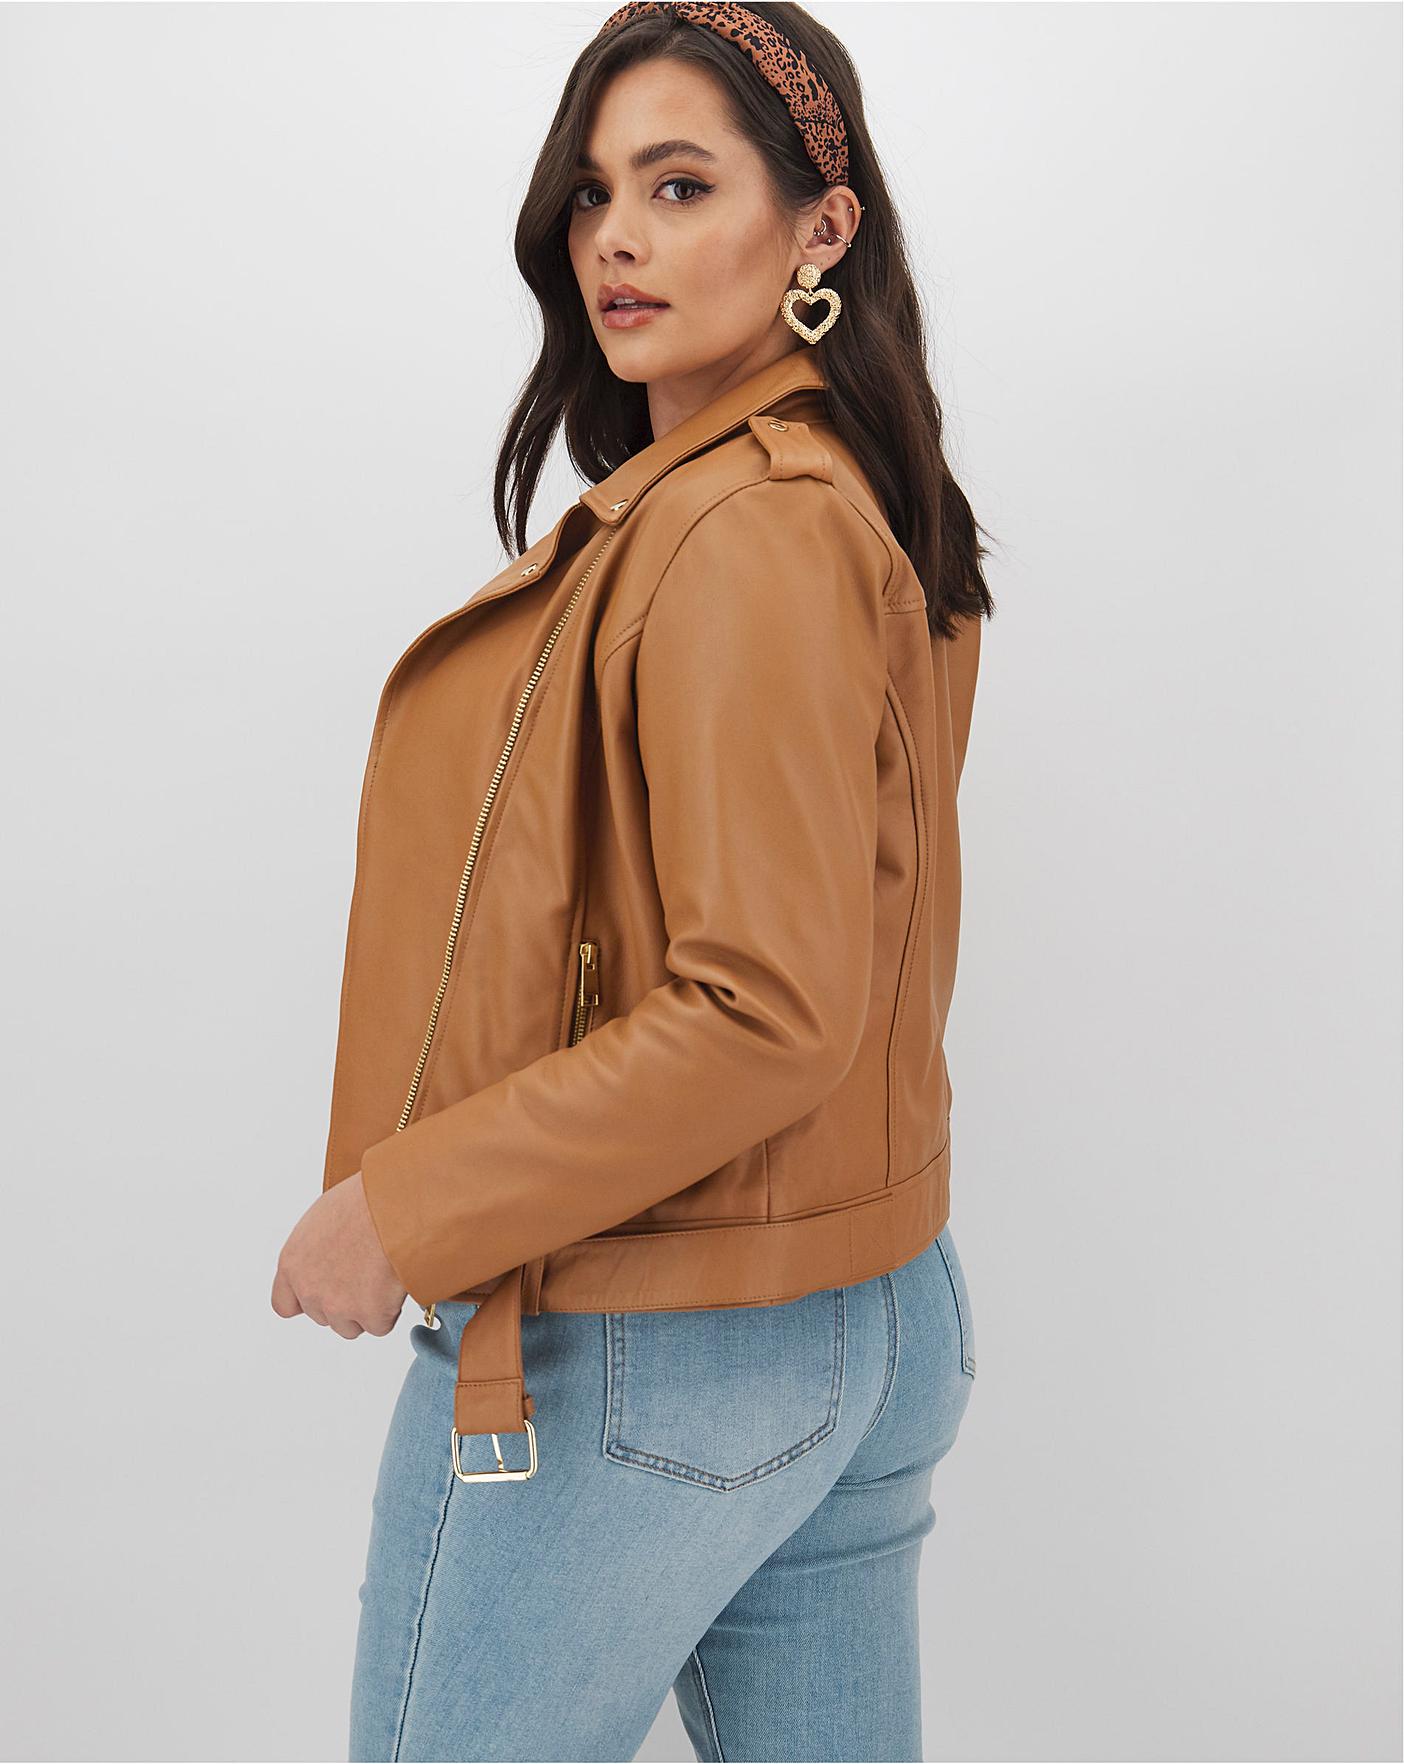 Joanna Hope Fashion Stud Leather Jacket | Simply Be